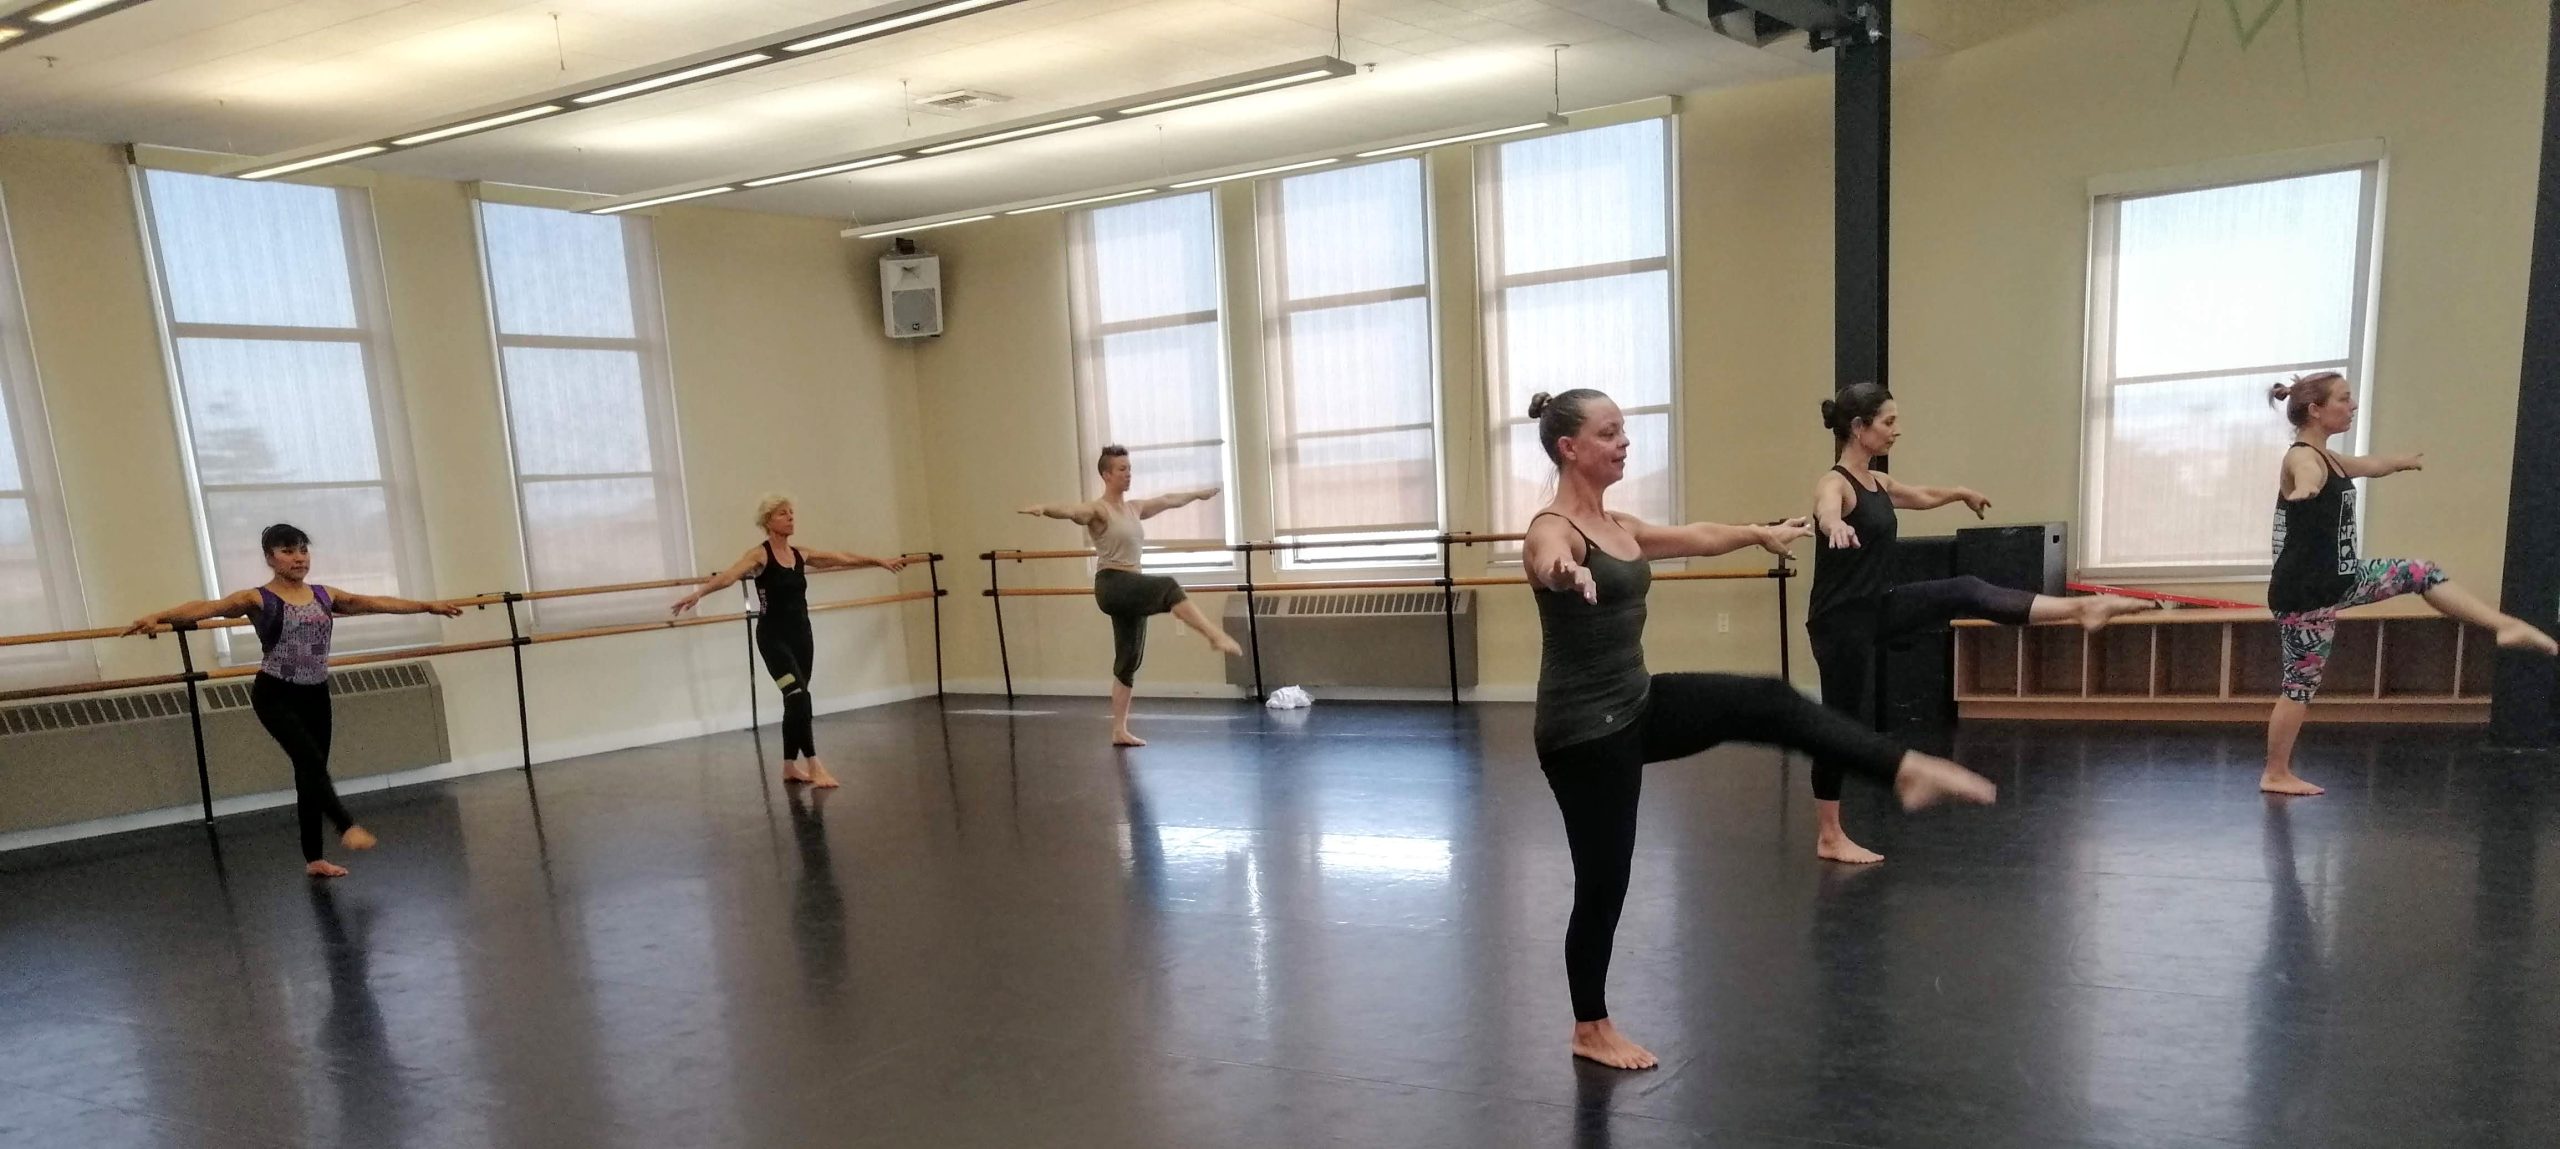 Adult Dance Classes in the Malashock Dance Studio